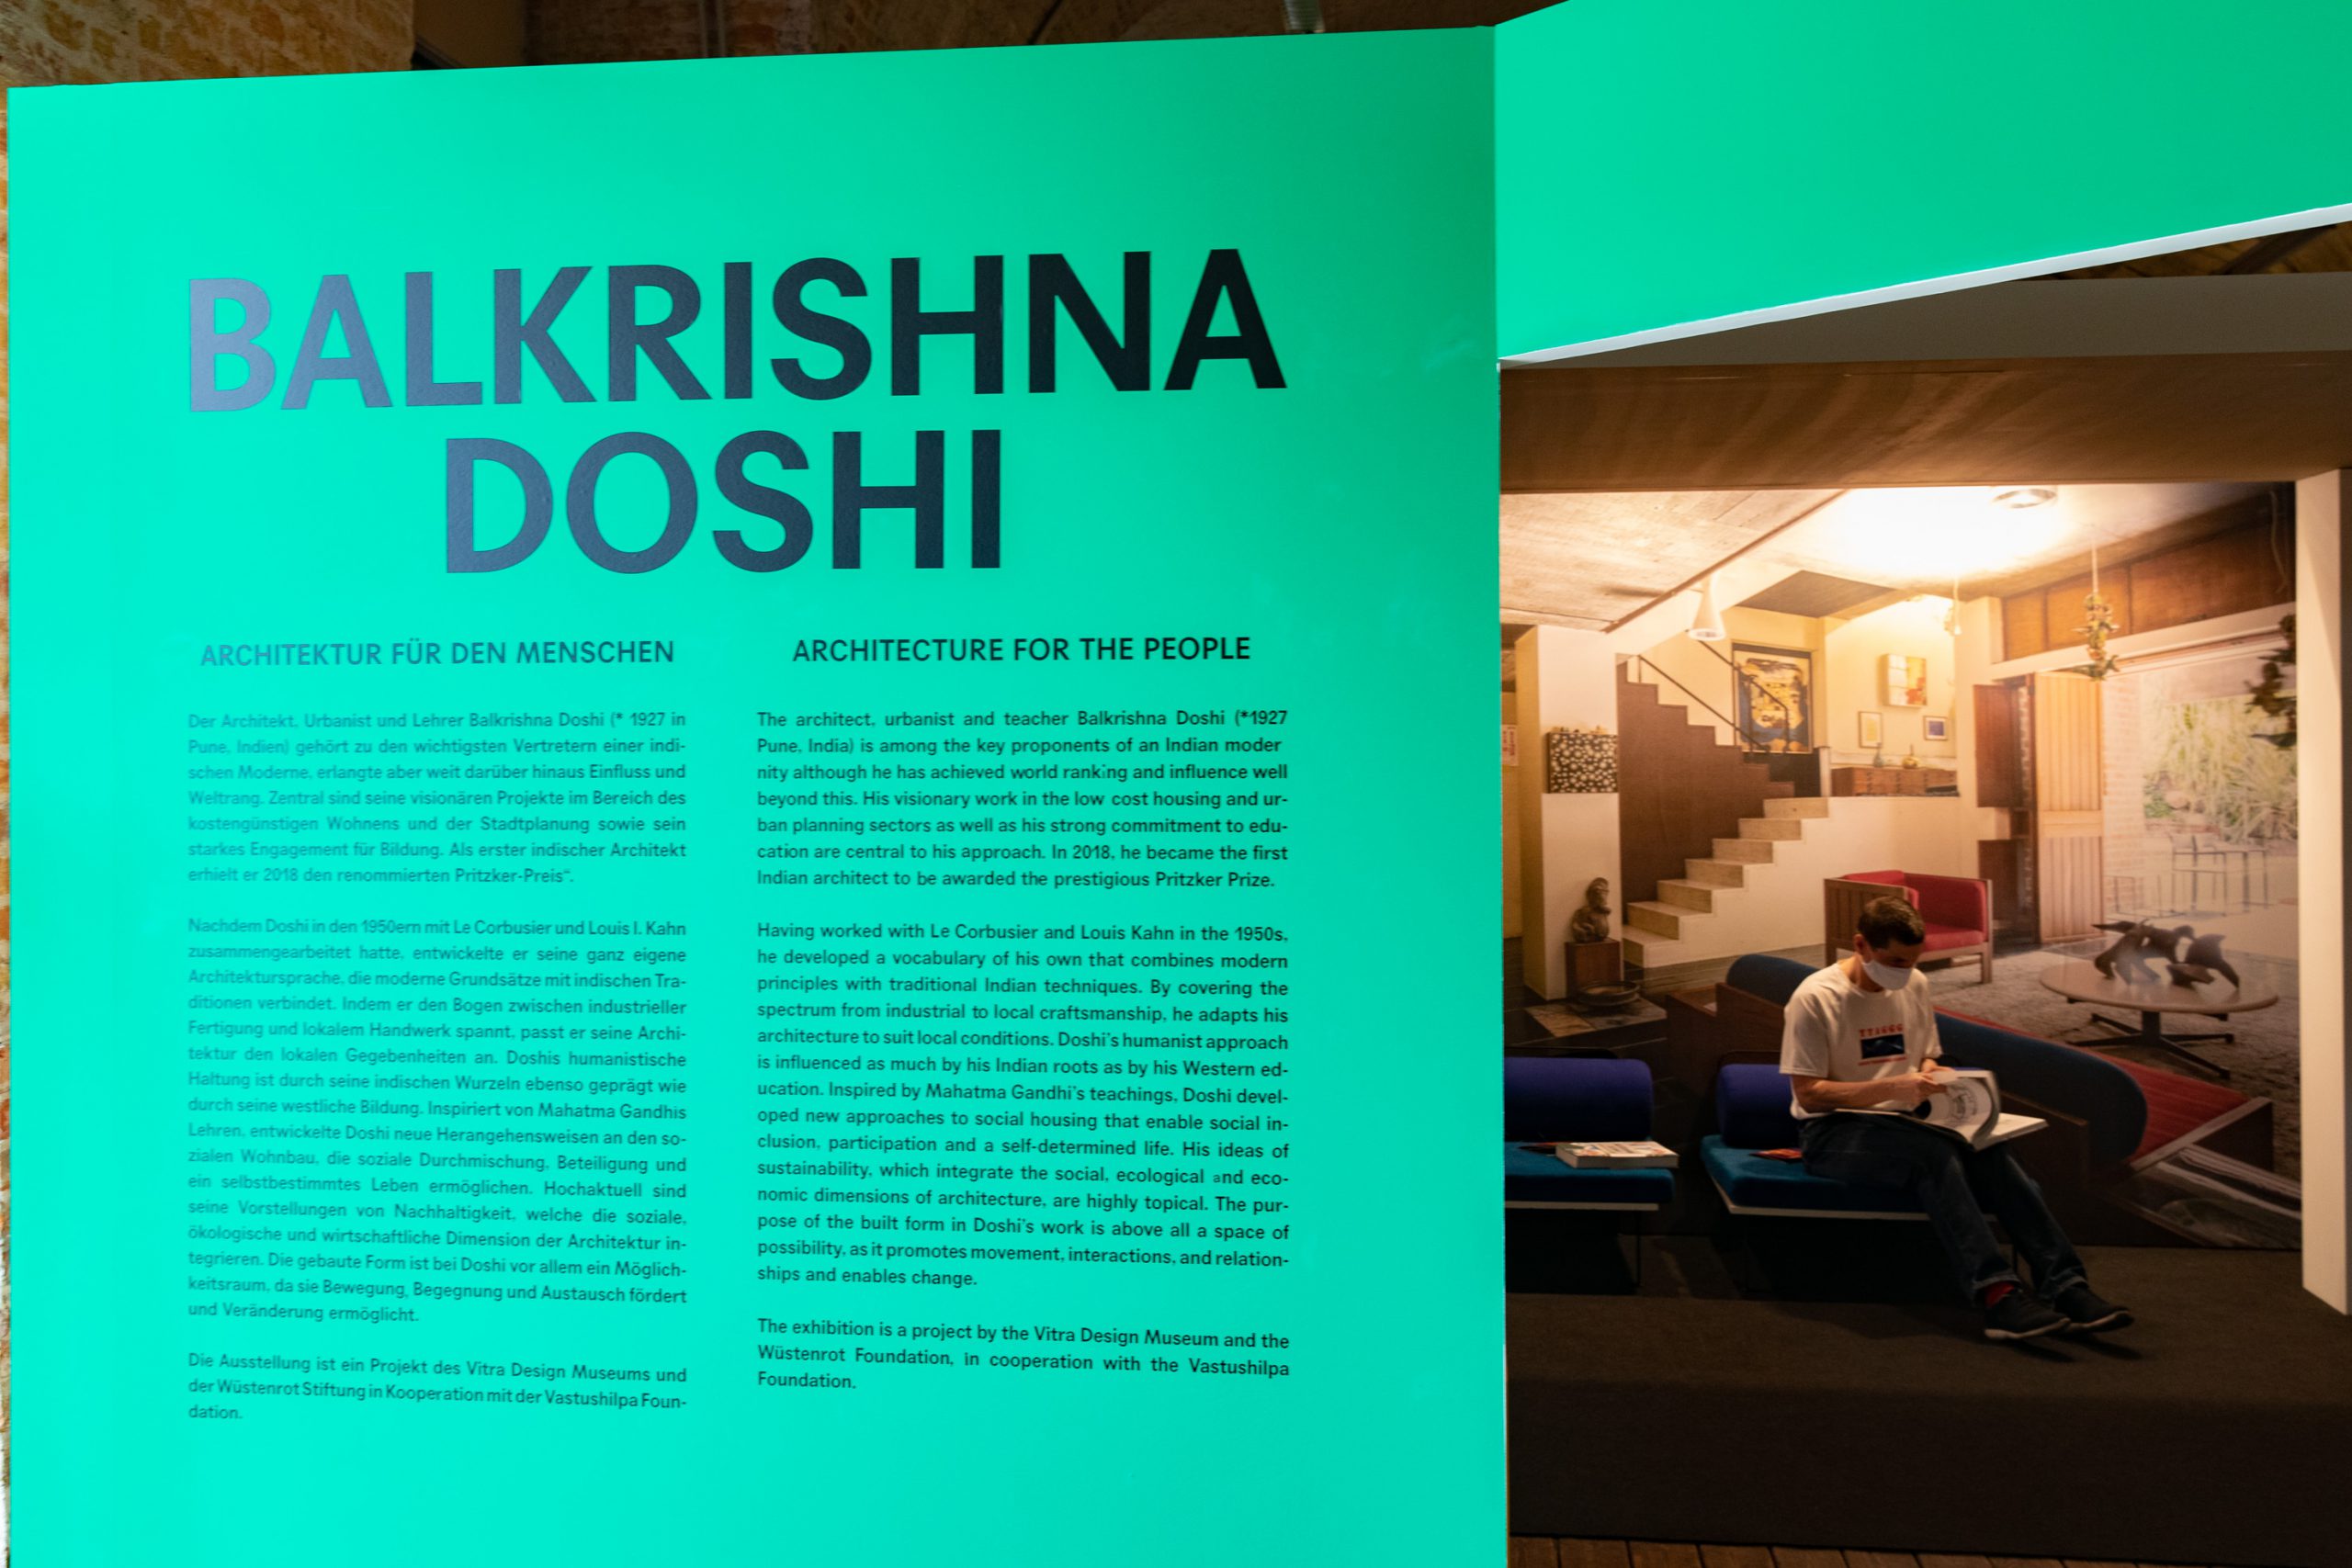 große grüne Wand mit Text über Balkrishna Doshi